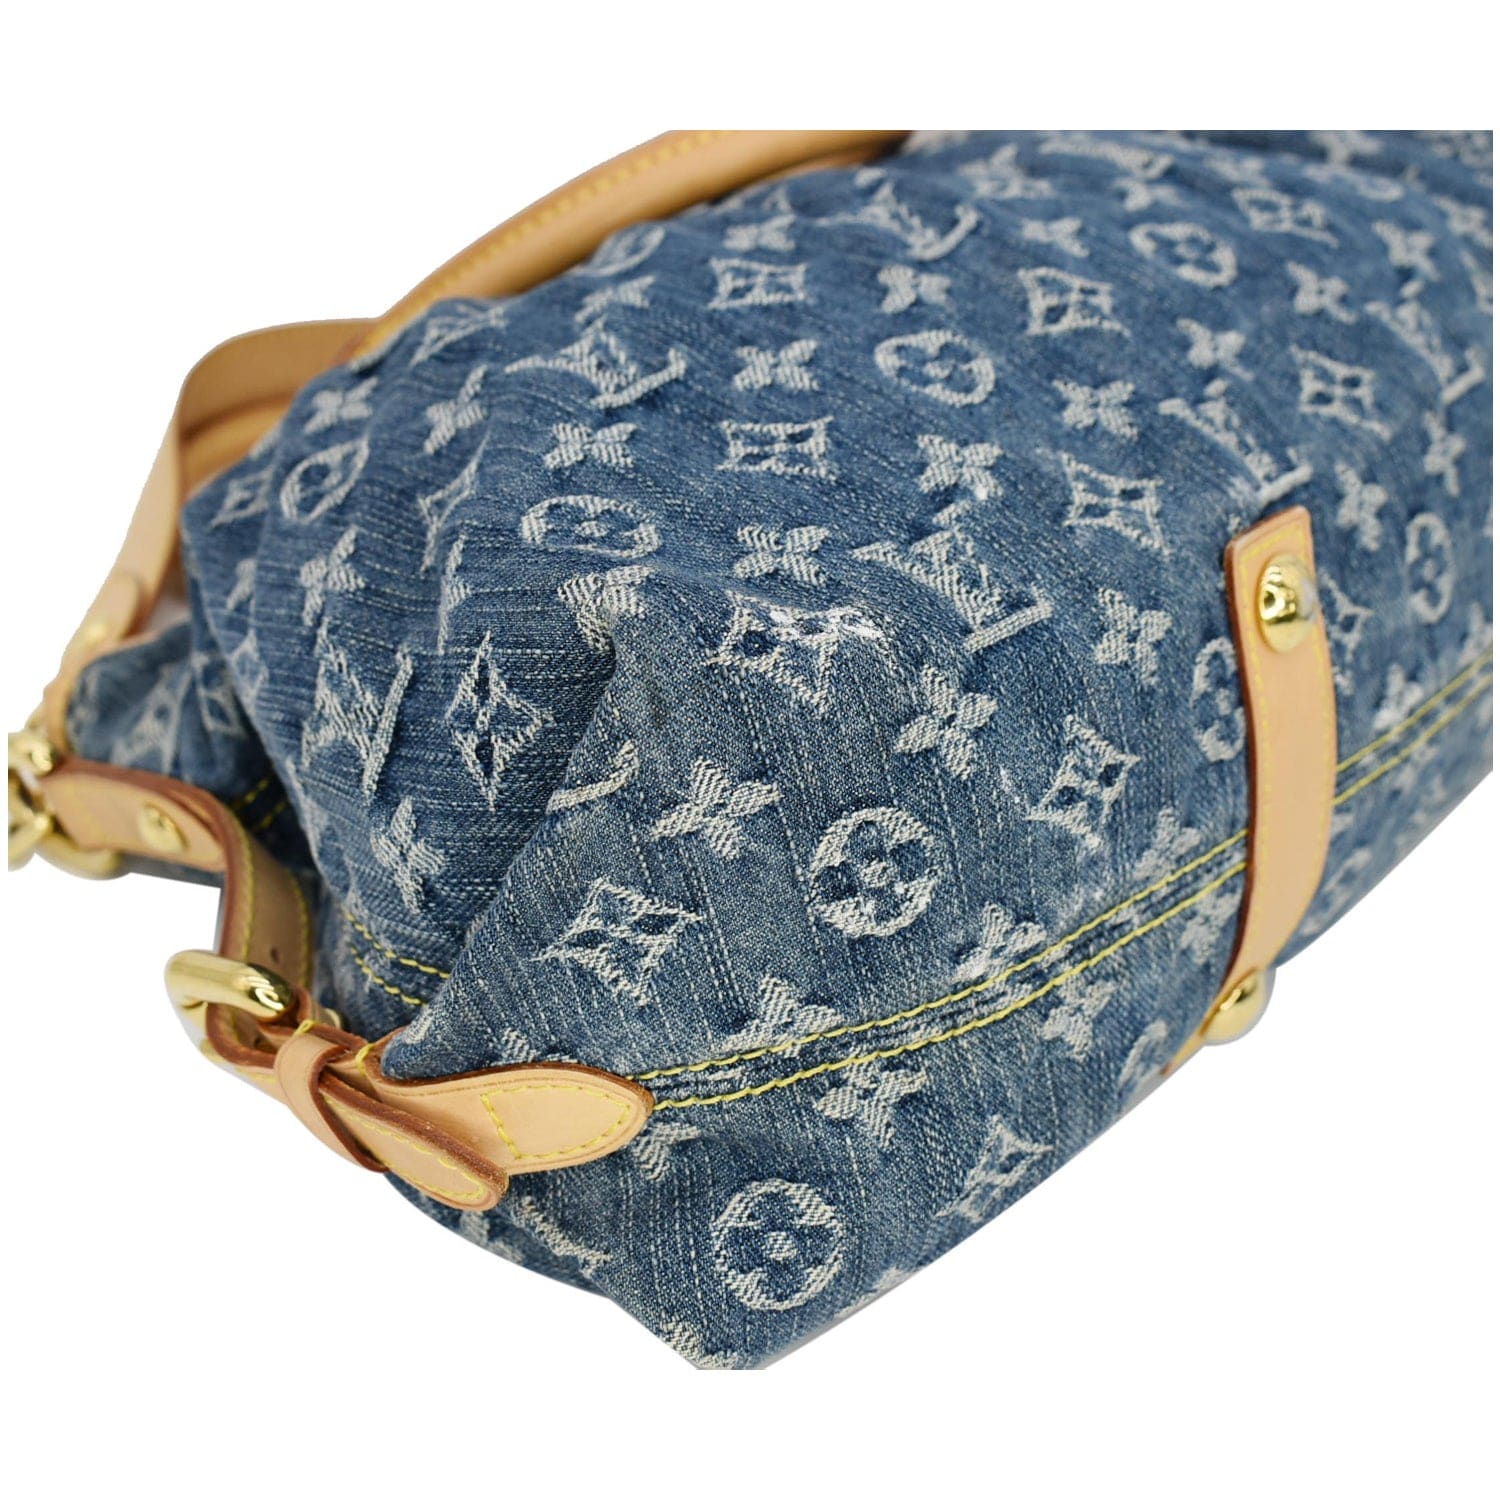 Louis Vuitton Denim Exterior Tote Bags & Handbags for Women